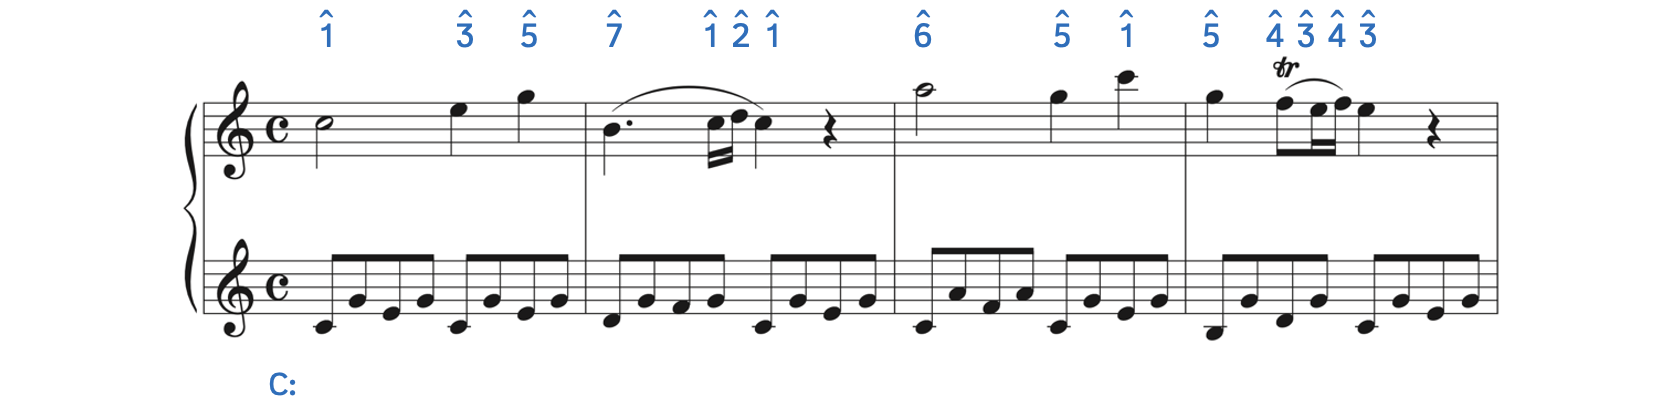 Original melody of Mozart's Piano Sonata No. 16 in C Major, Kurshell 545, first movement - Allegro